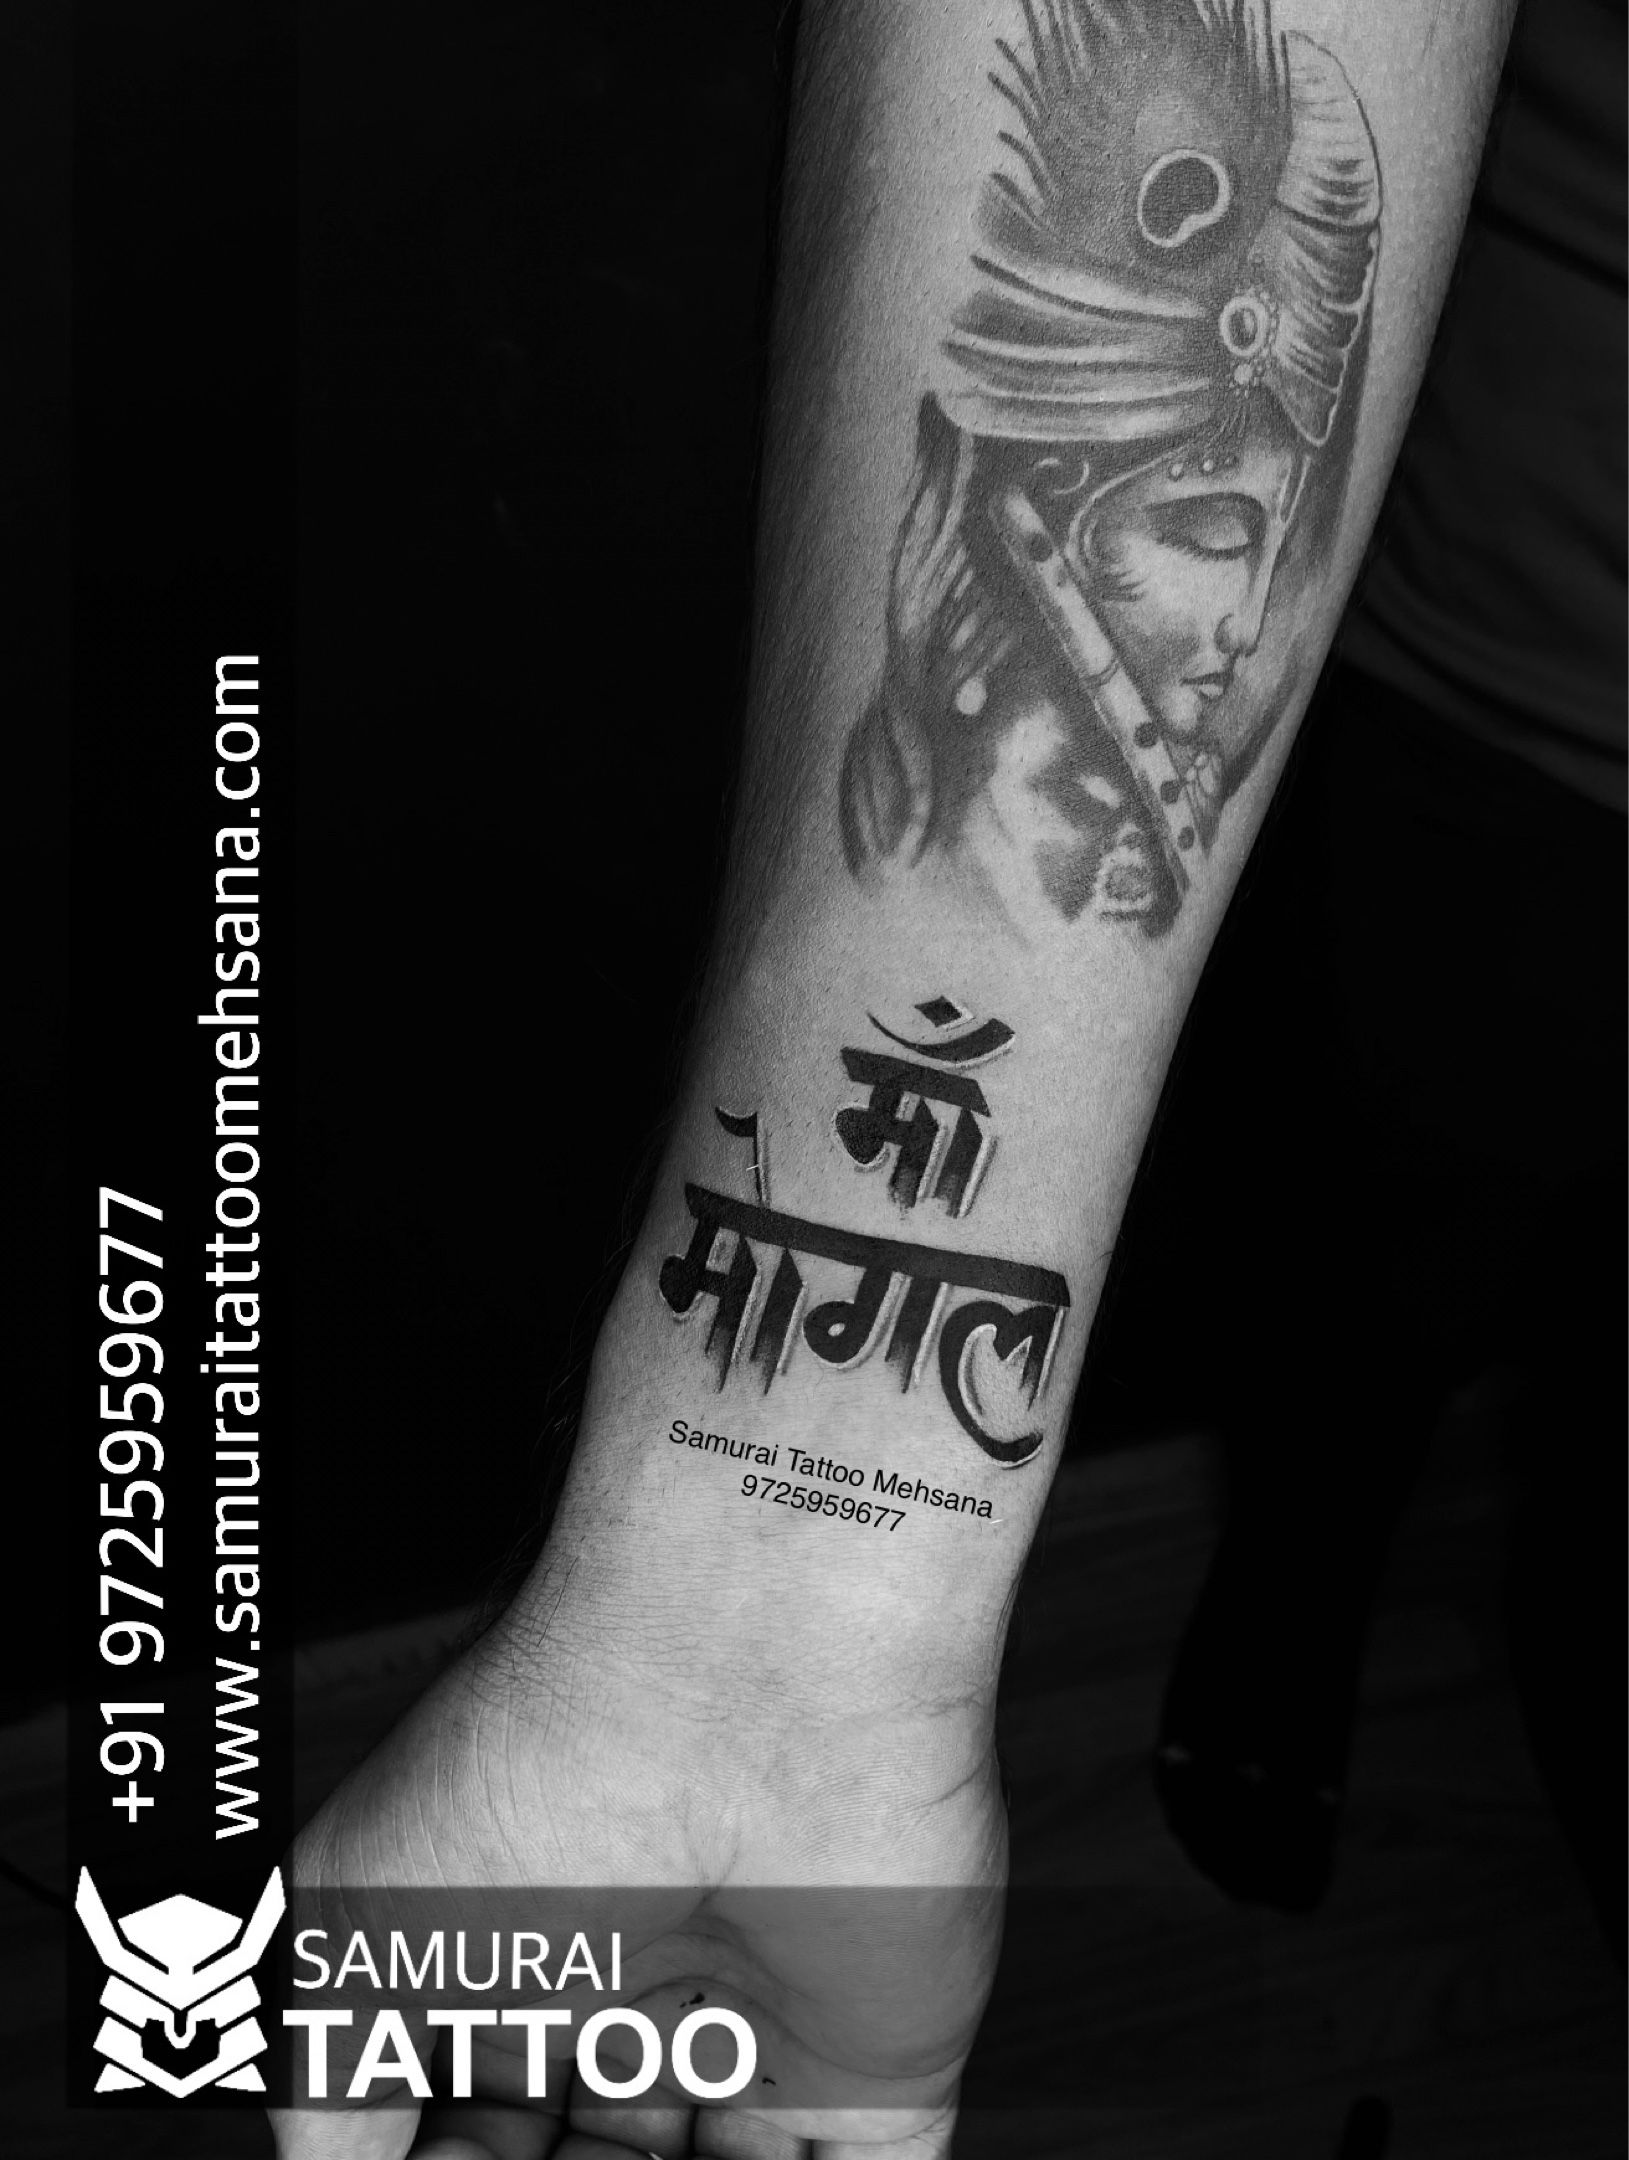 Tattoo uploaded by Samurai Tattoo mehsana • Band tattoo |Band tattoo design  |Band tattoo ideas |mogal maa tattoo |Maa Mogal tattoo |Mogal mataji nu  tattoo • Tattoodo